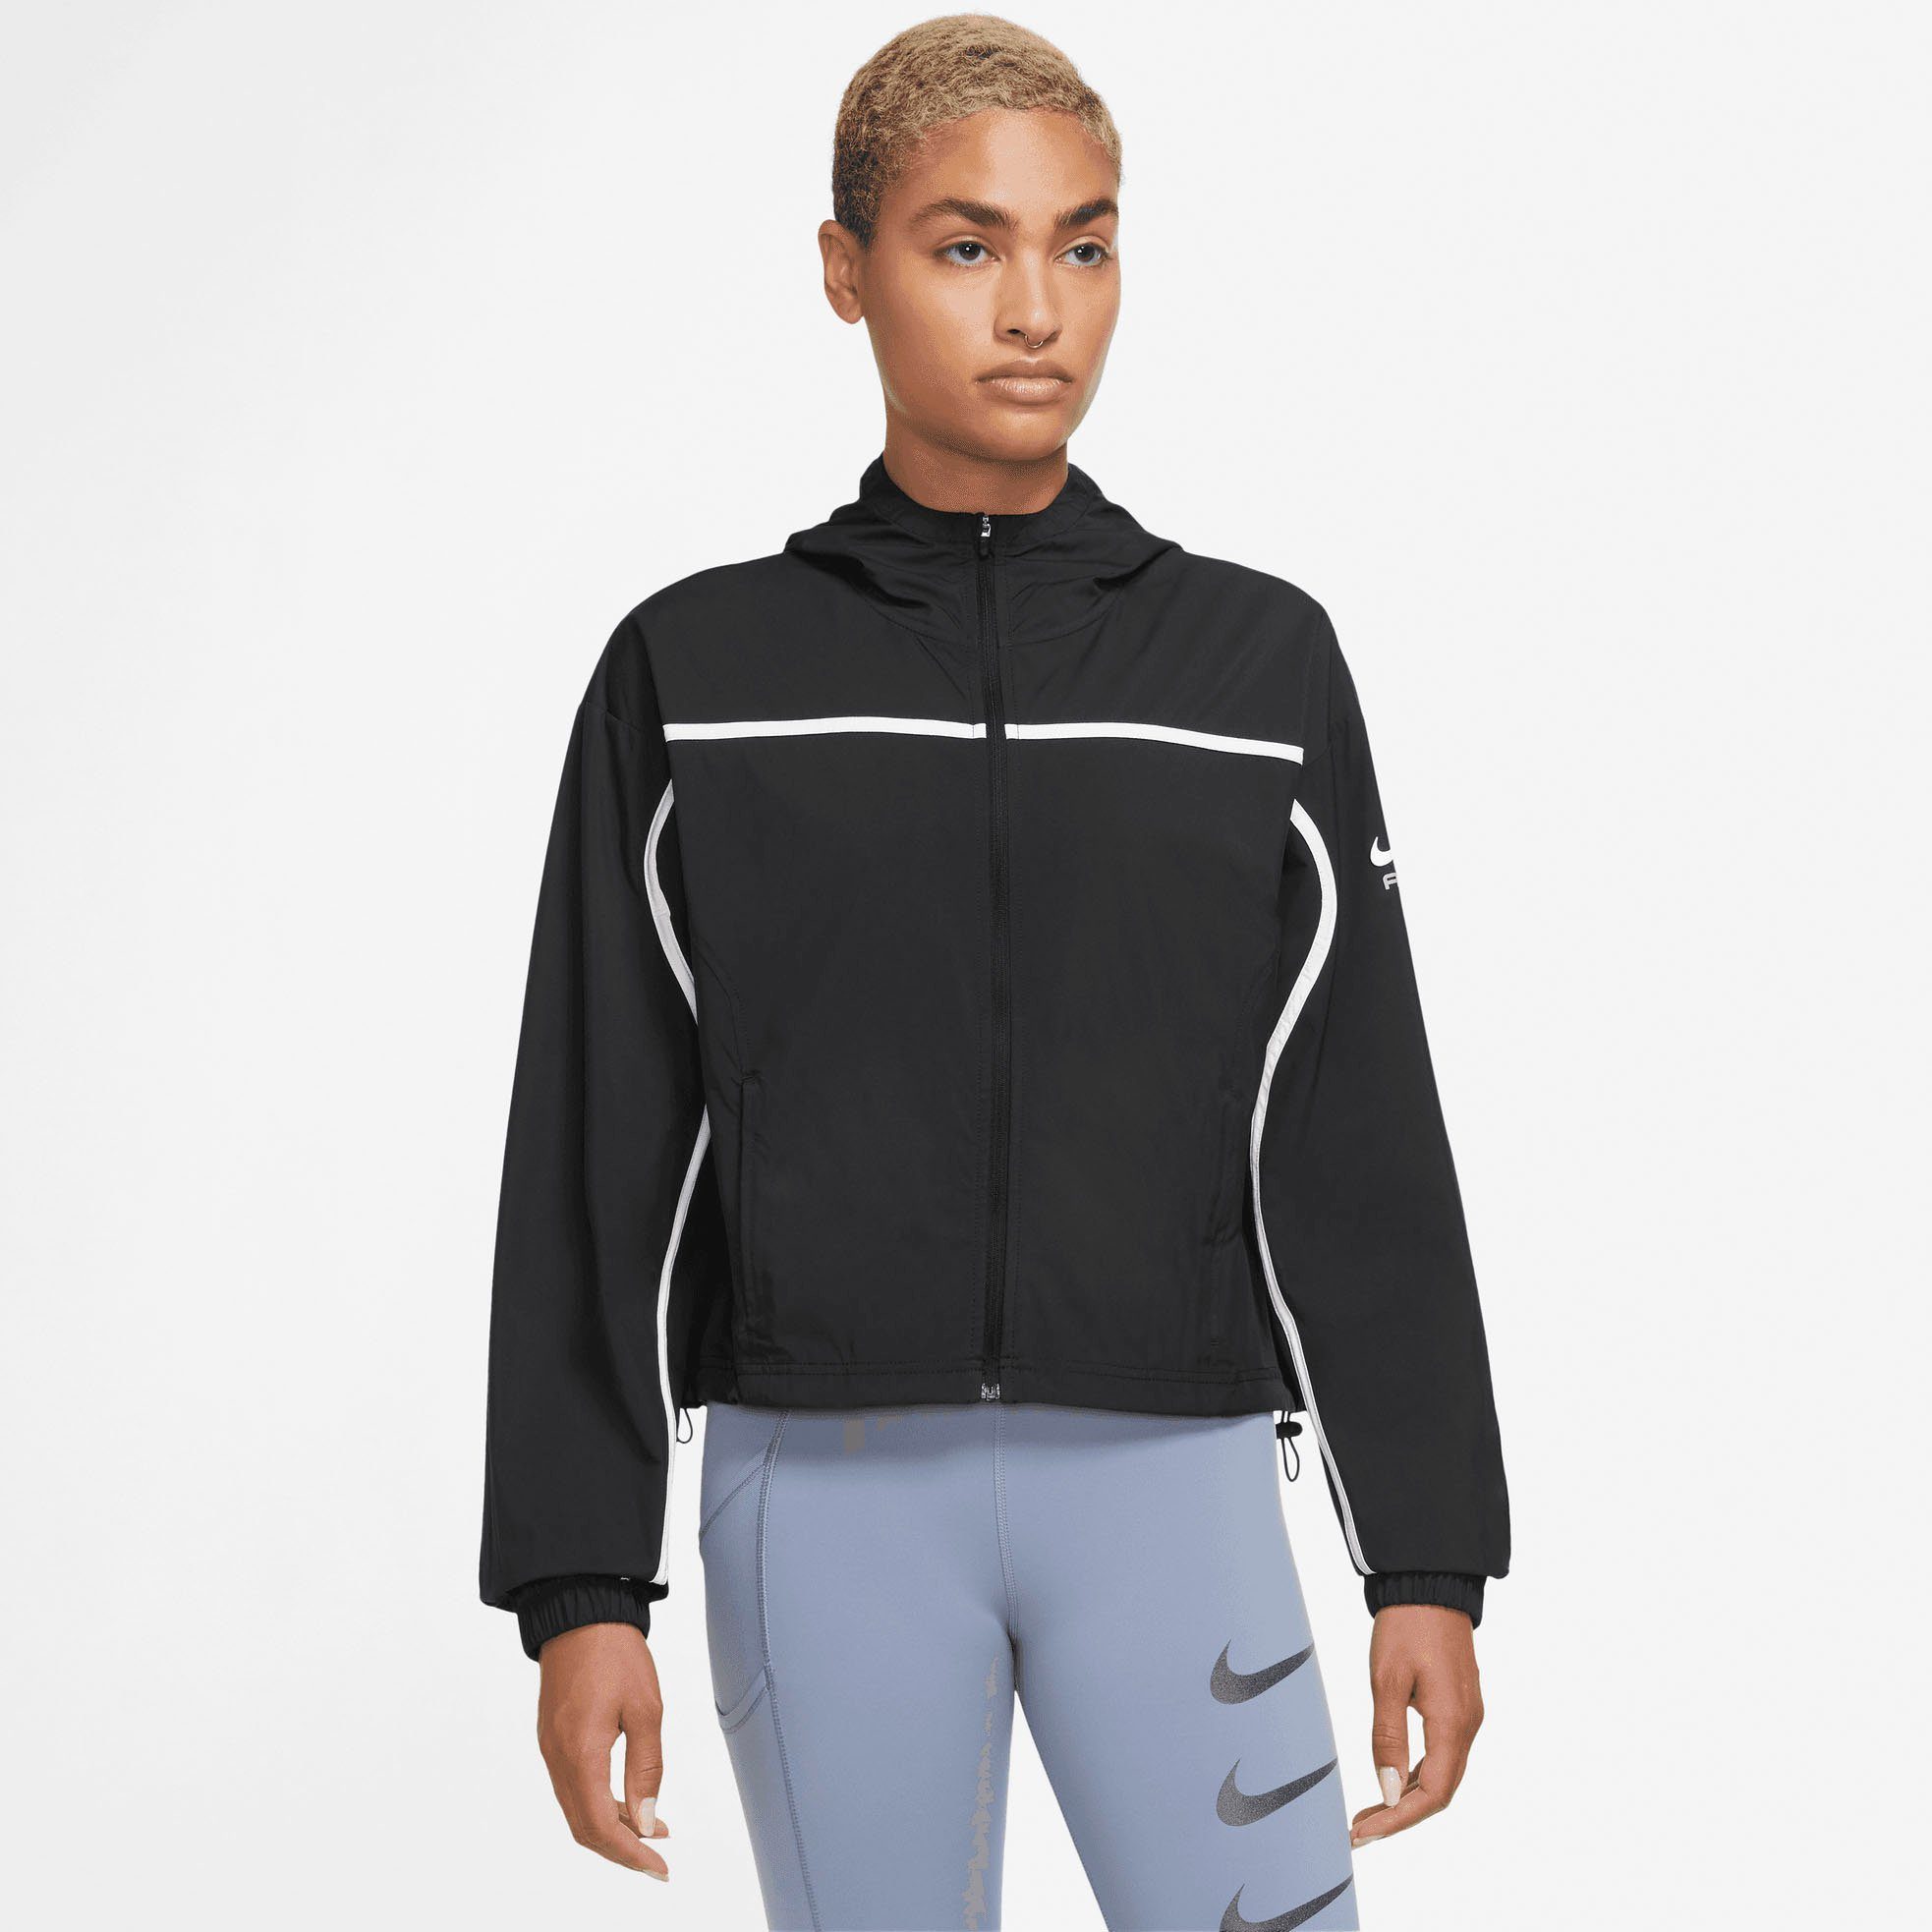 Running Nike Women's Air Laufjacke Jacket Dri-FIT